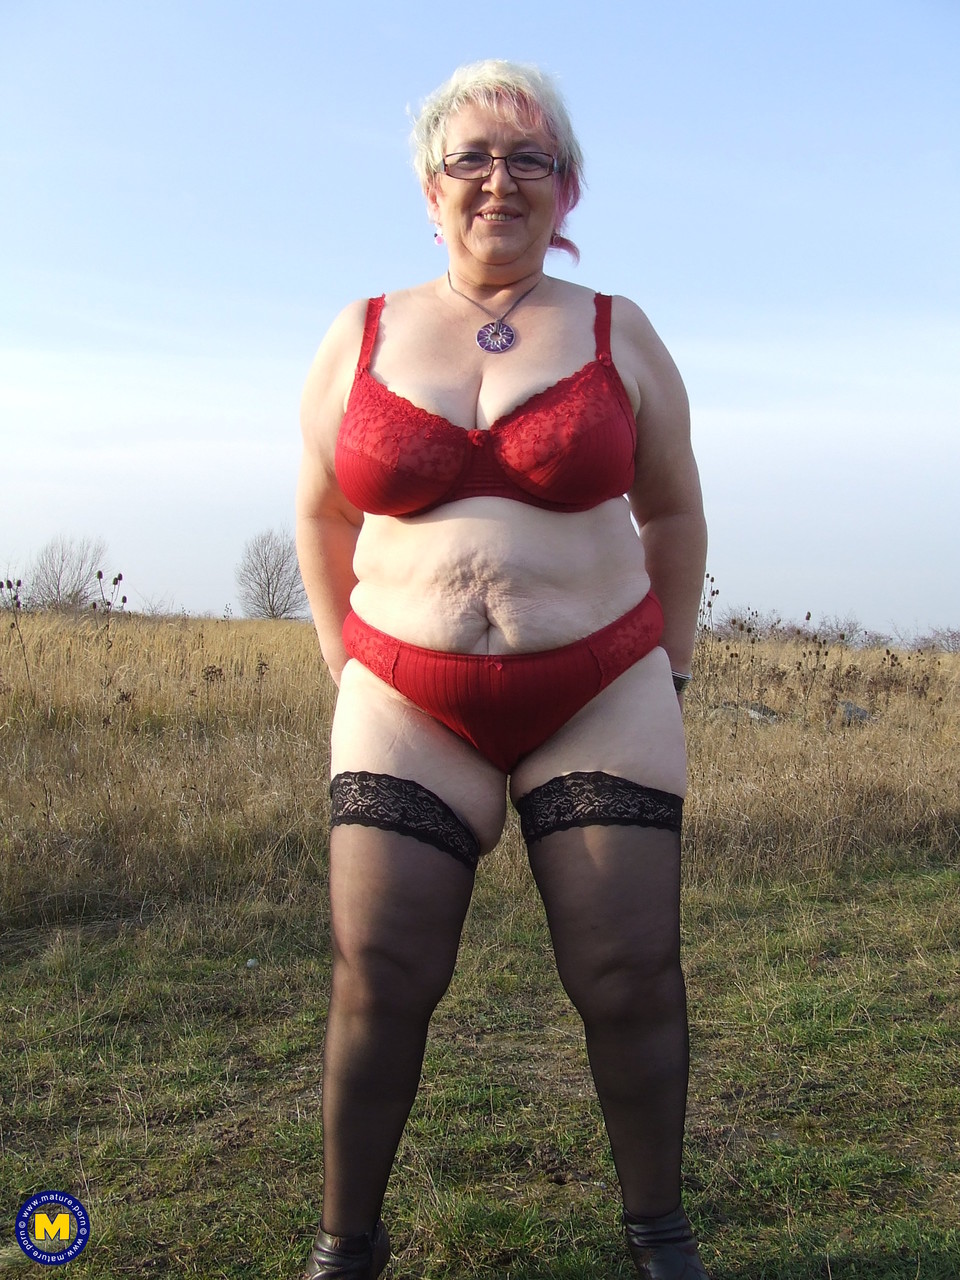 Wild granny with huge saggy tits Silke poses in lingerie & masturbates outside foto porno #422616209 | Mature NL Pics, Silke, Granny, porno móvil